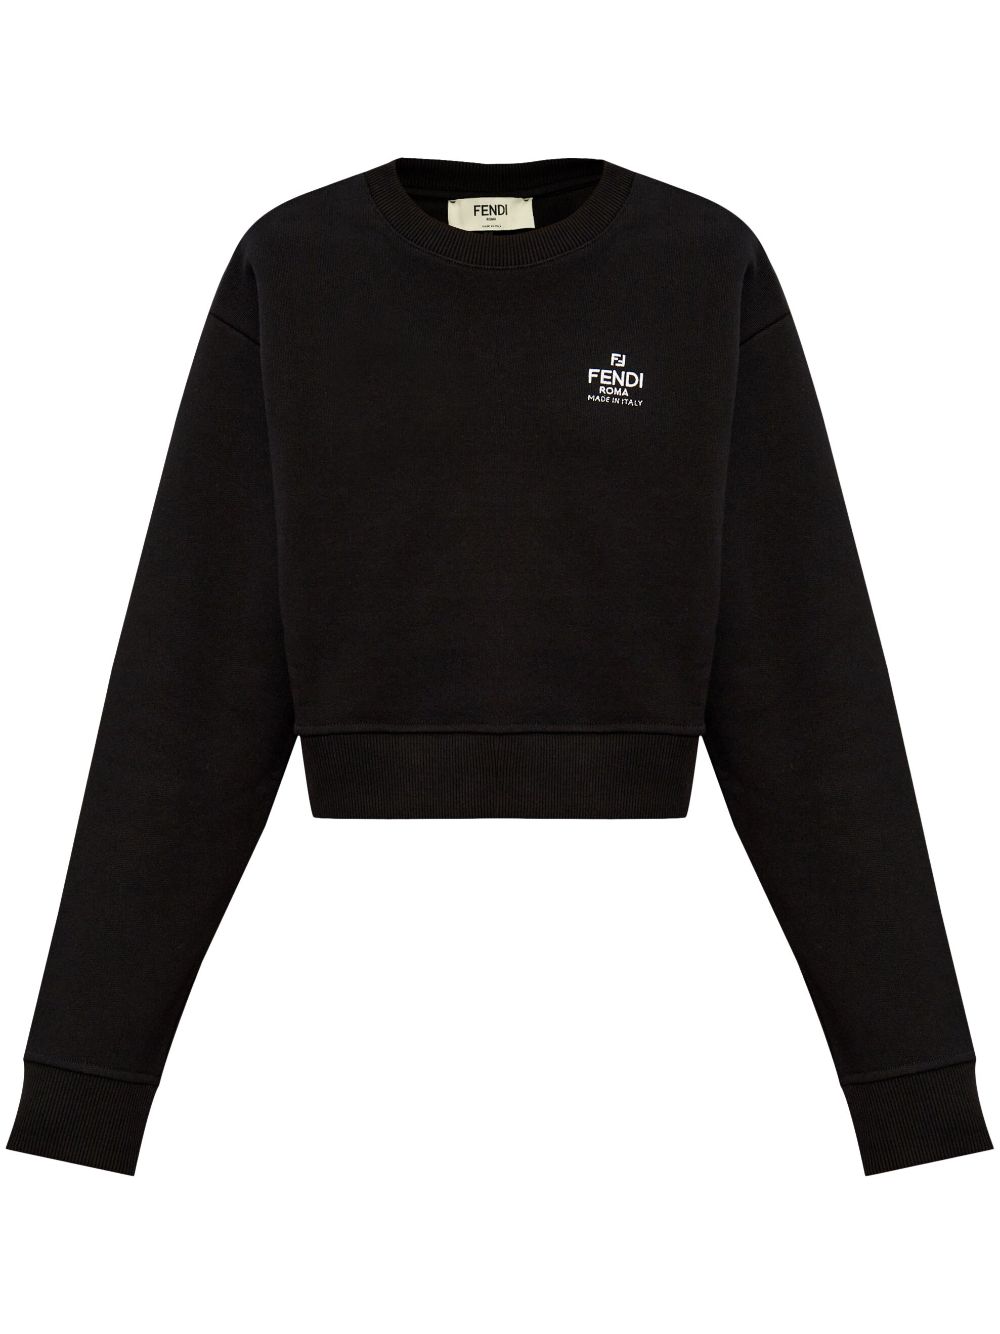 Shop Fendi Black Embroidered Crewneck Sweatshirt For Women